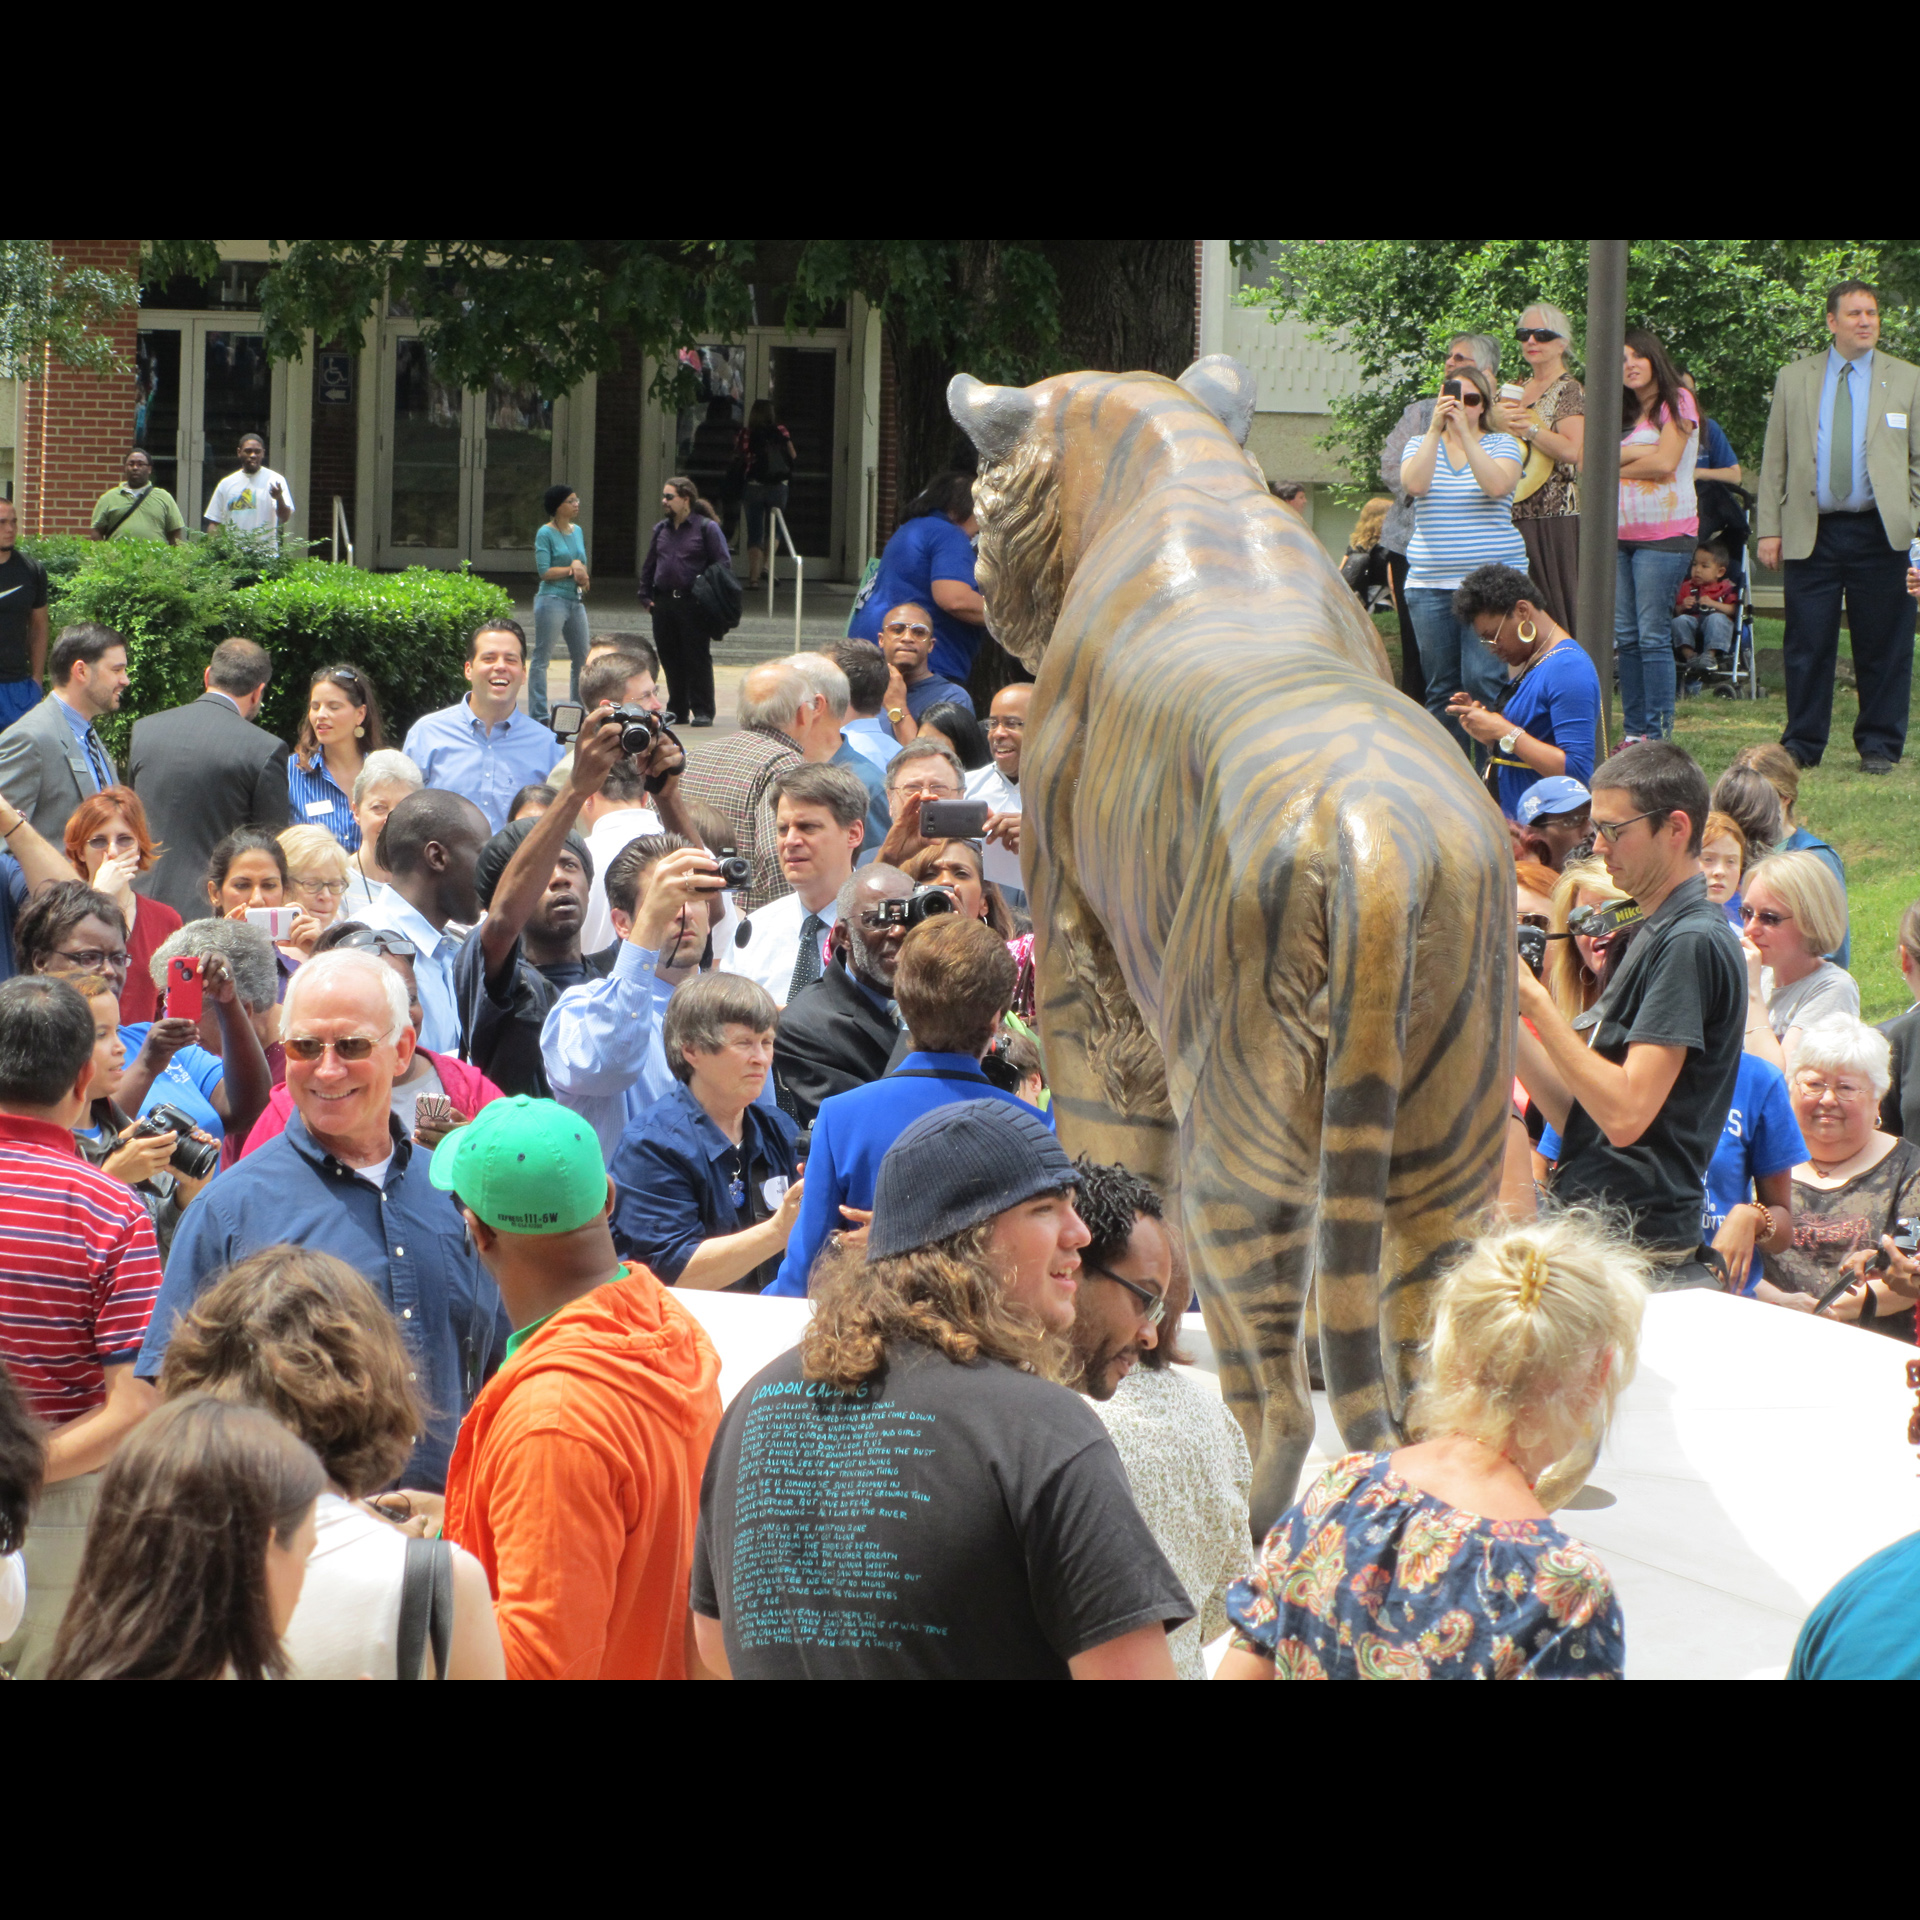 University of Memphis Tiger in Memphis, TN